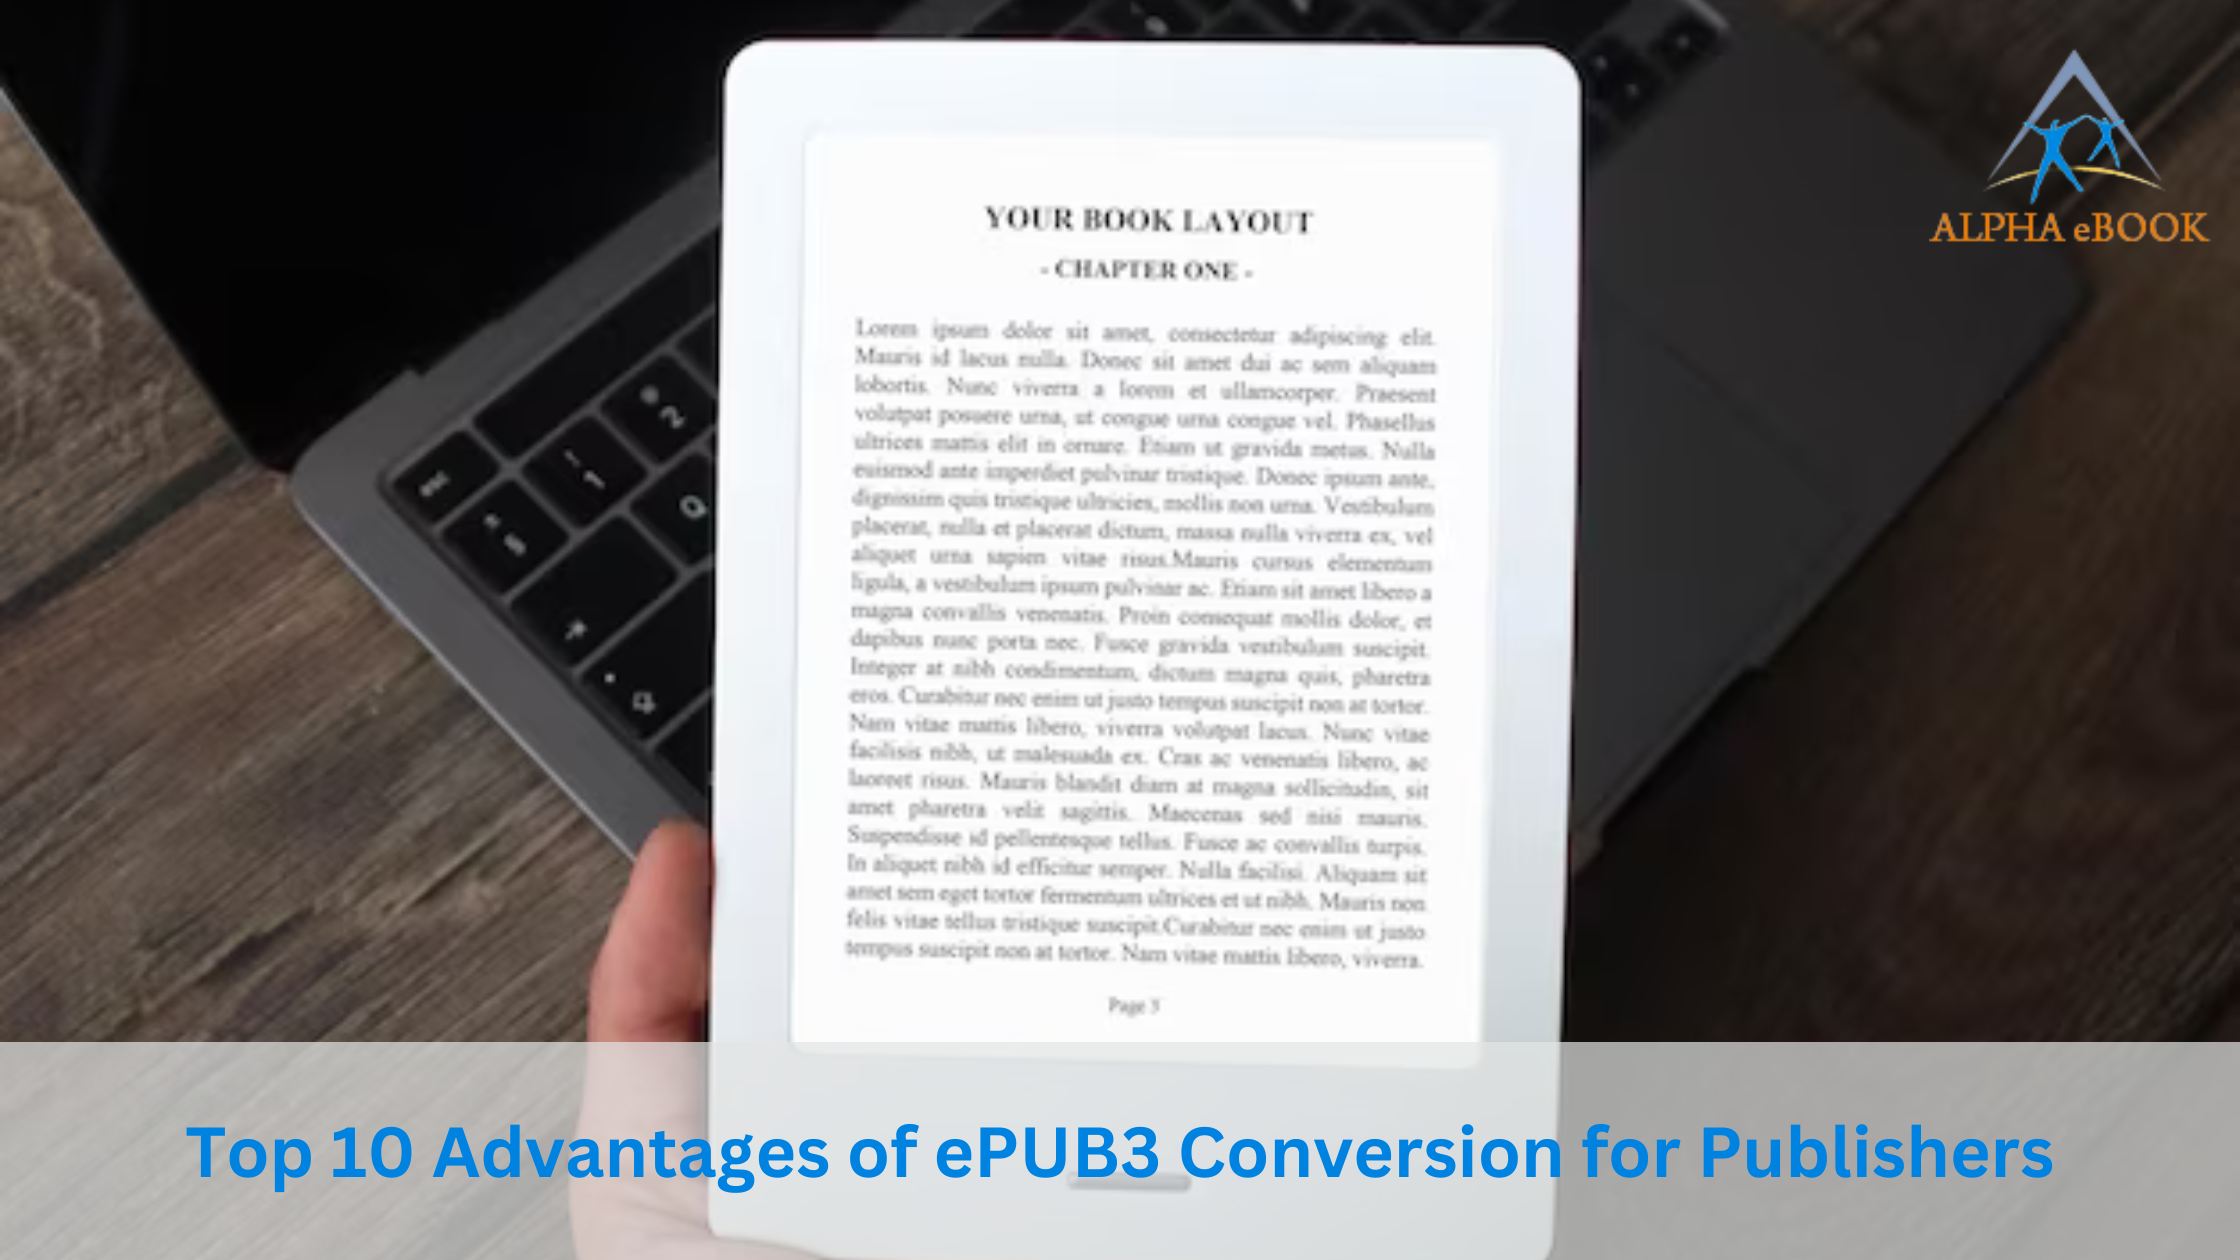 Top 10 Advantages of ePUB3 Conversion for Publishers